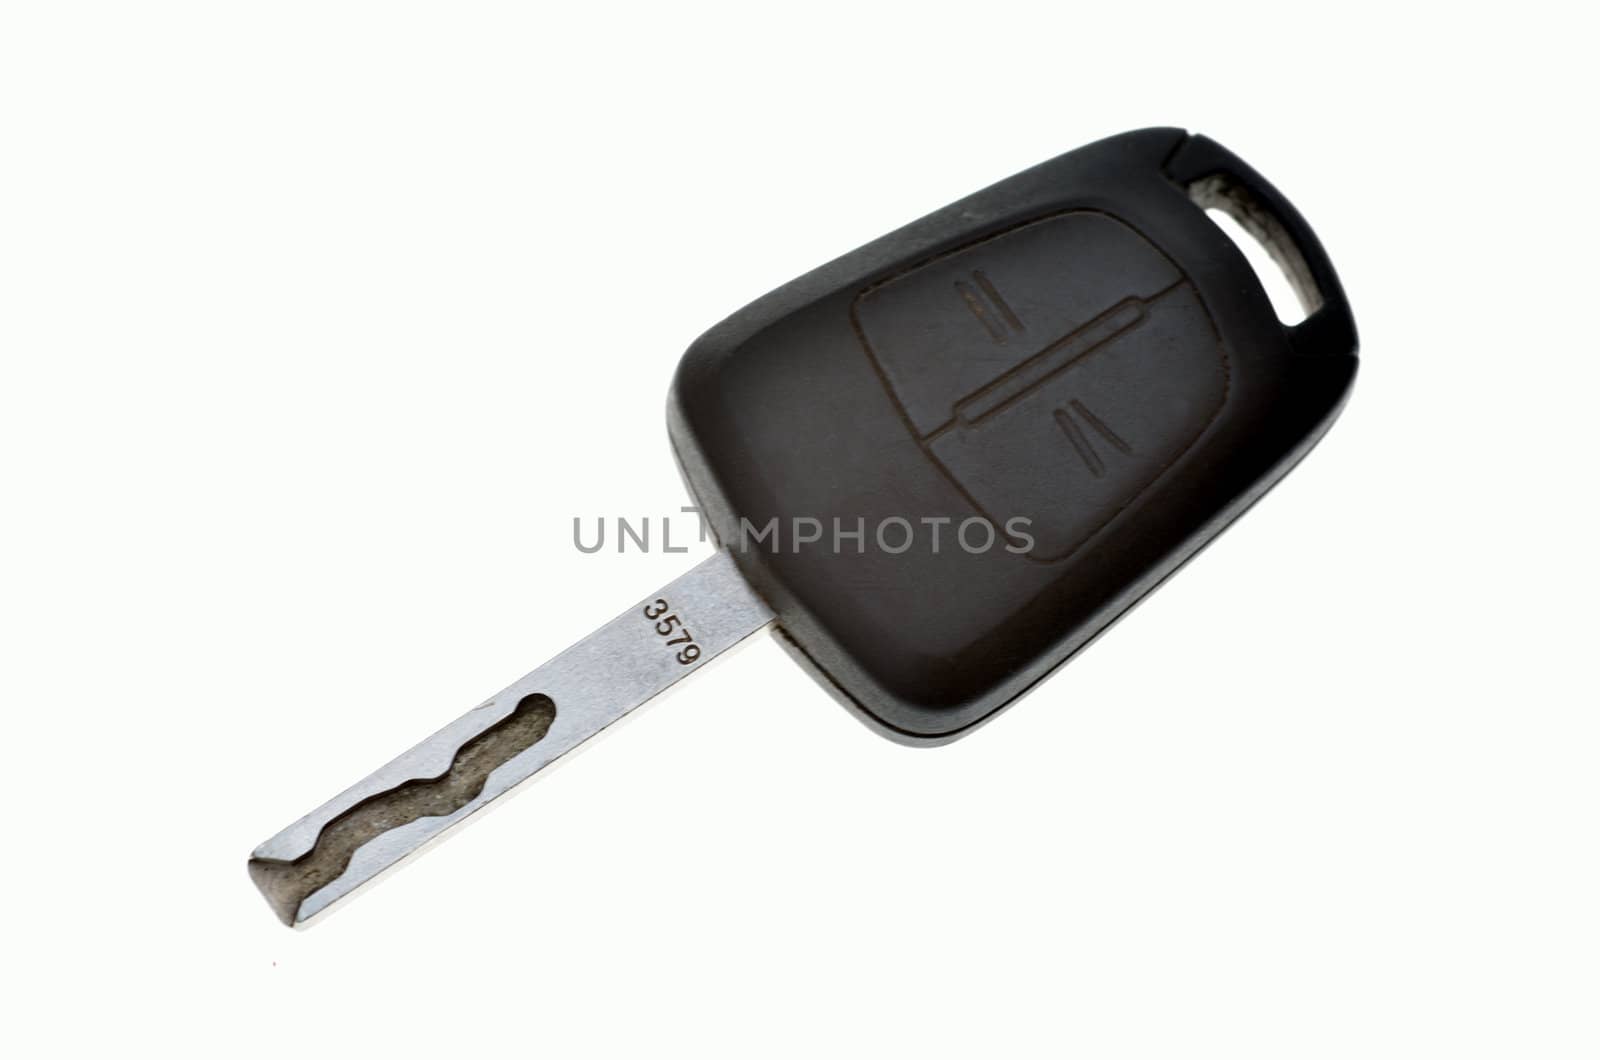 single car key